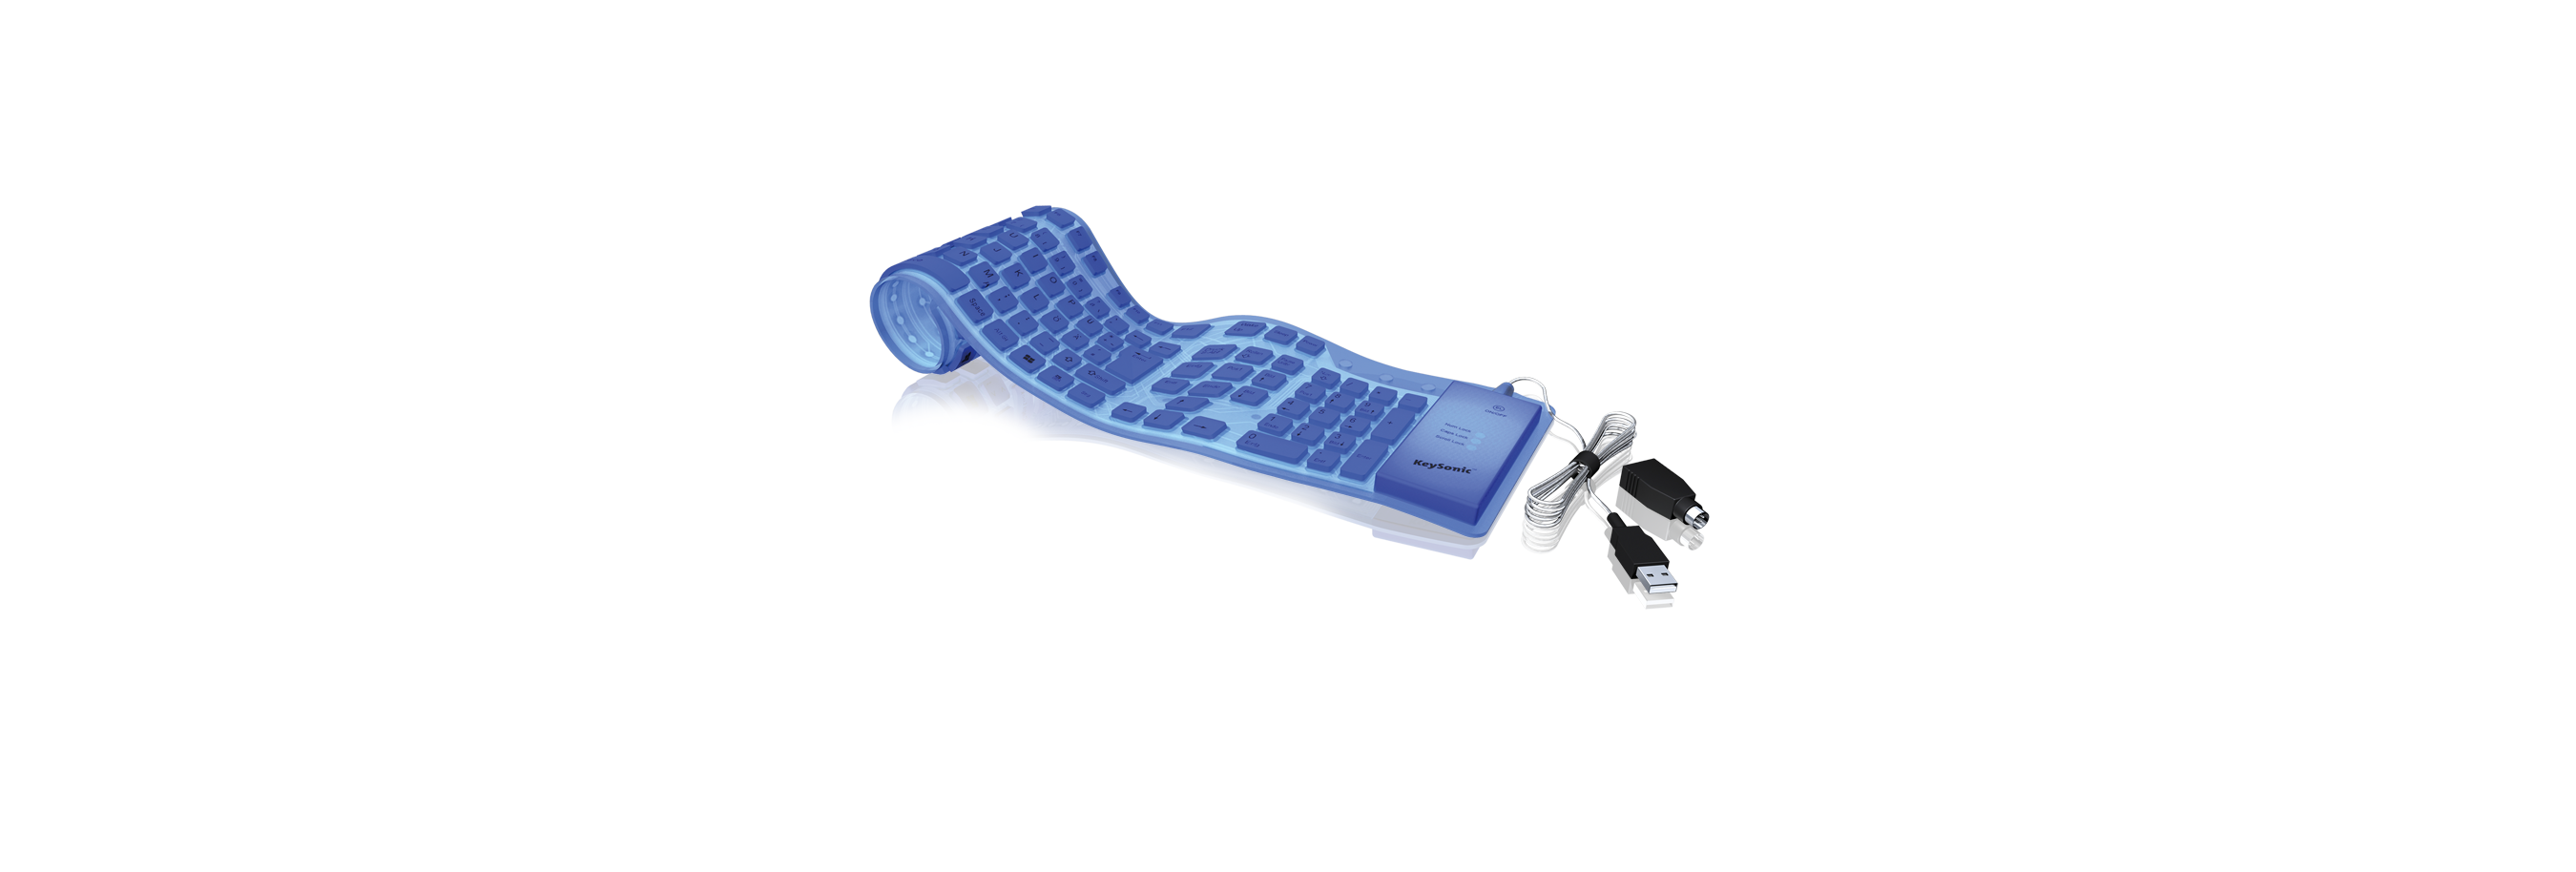 Full-size silicone keyboard (blue)